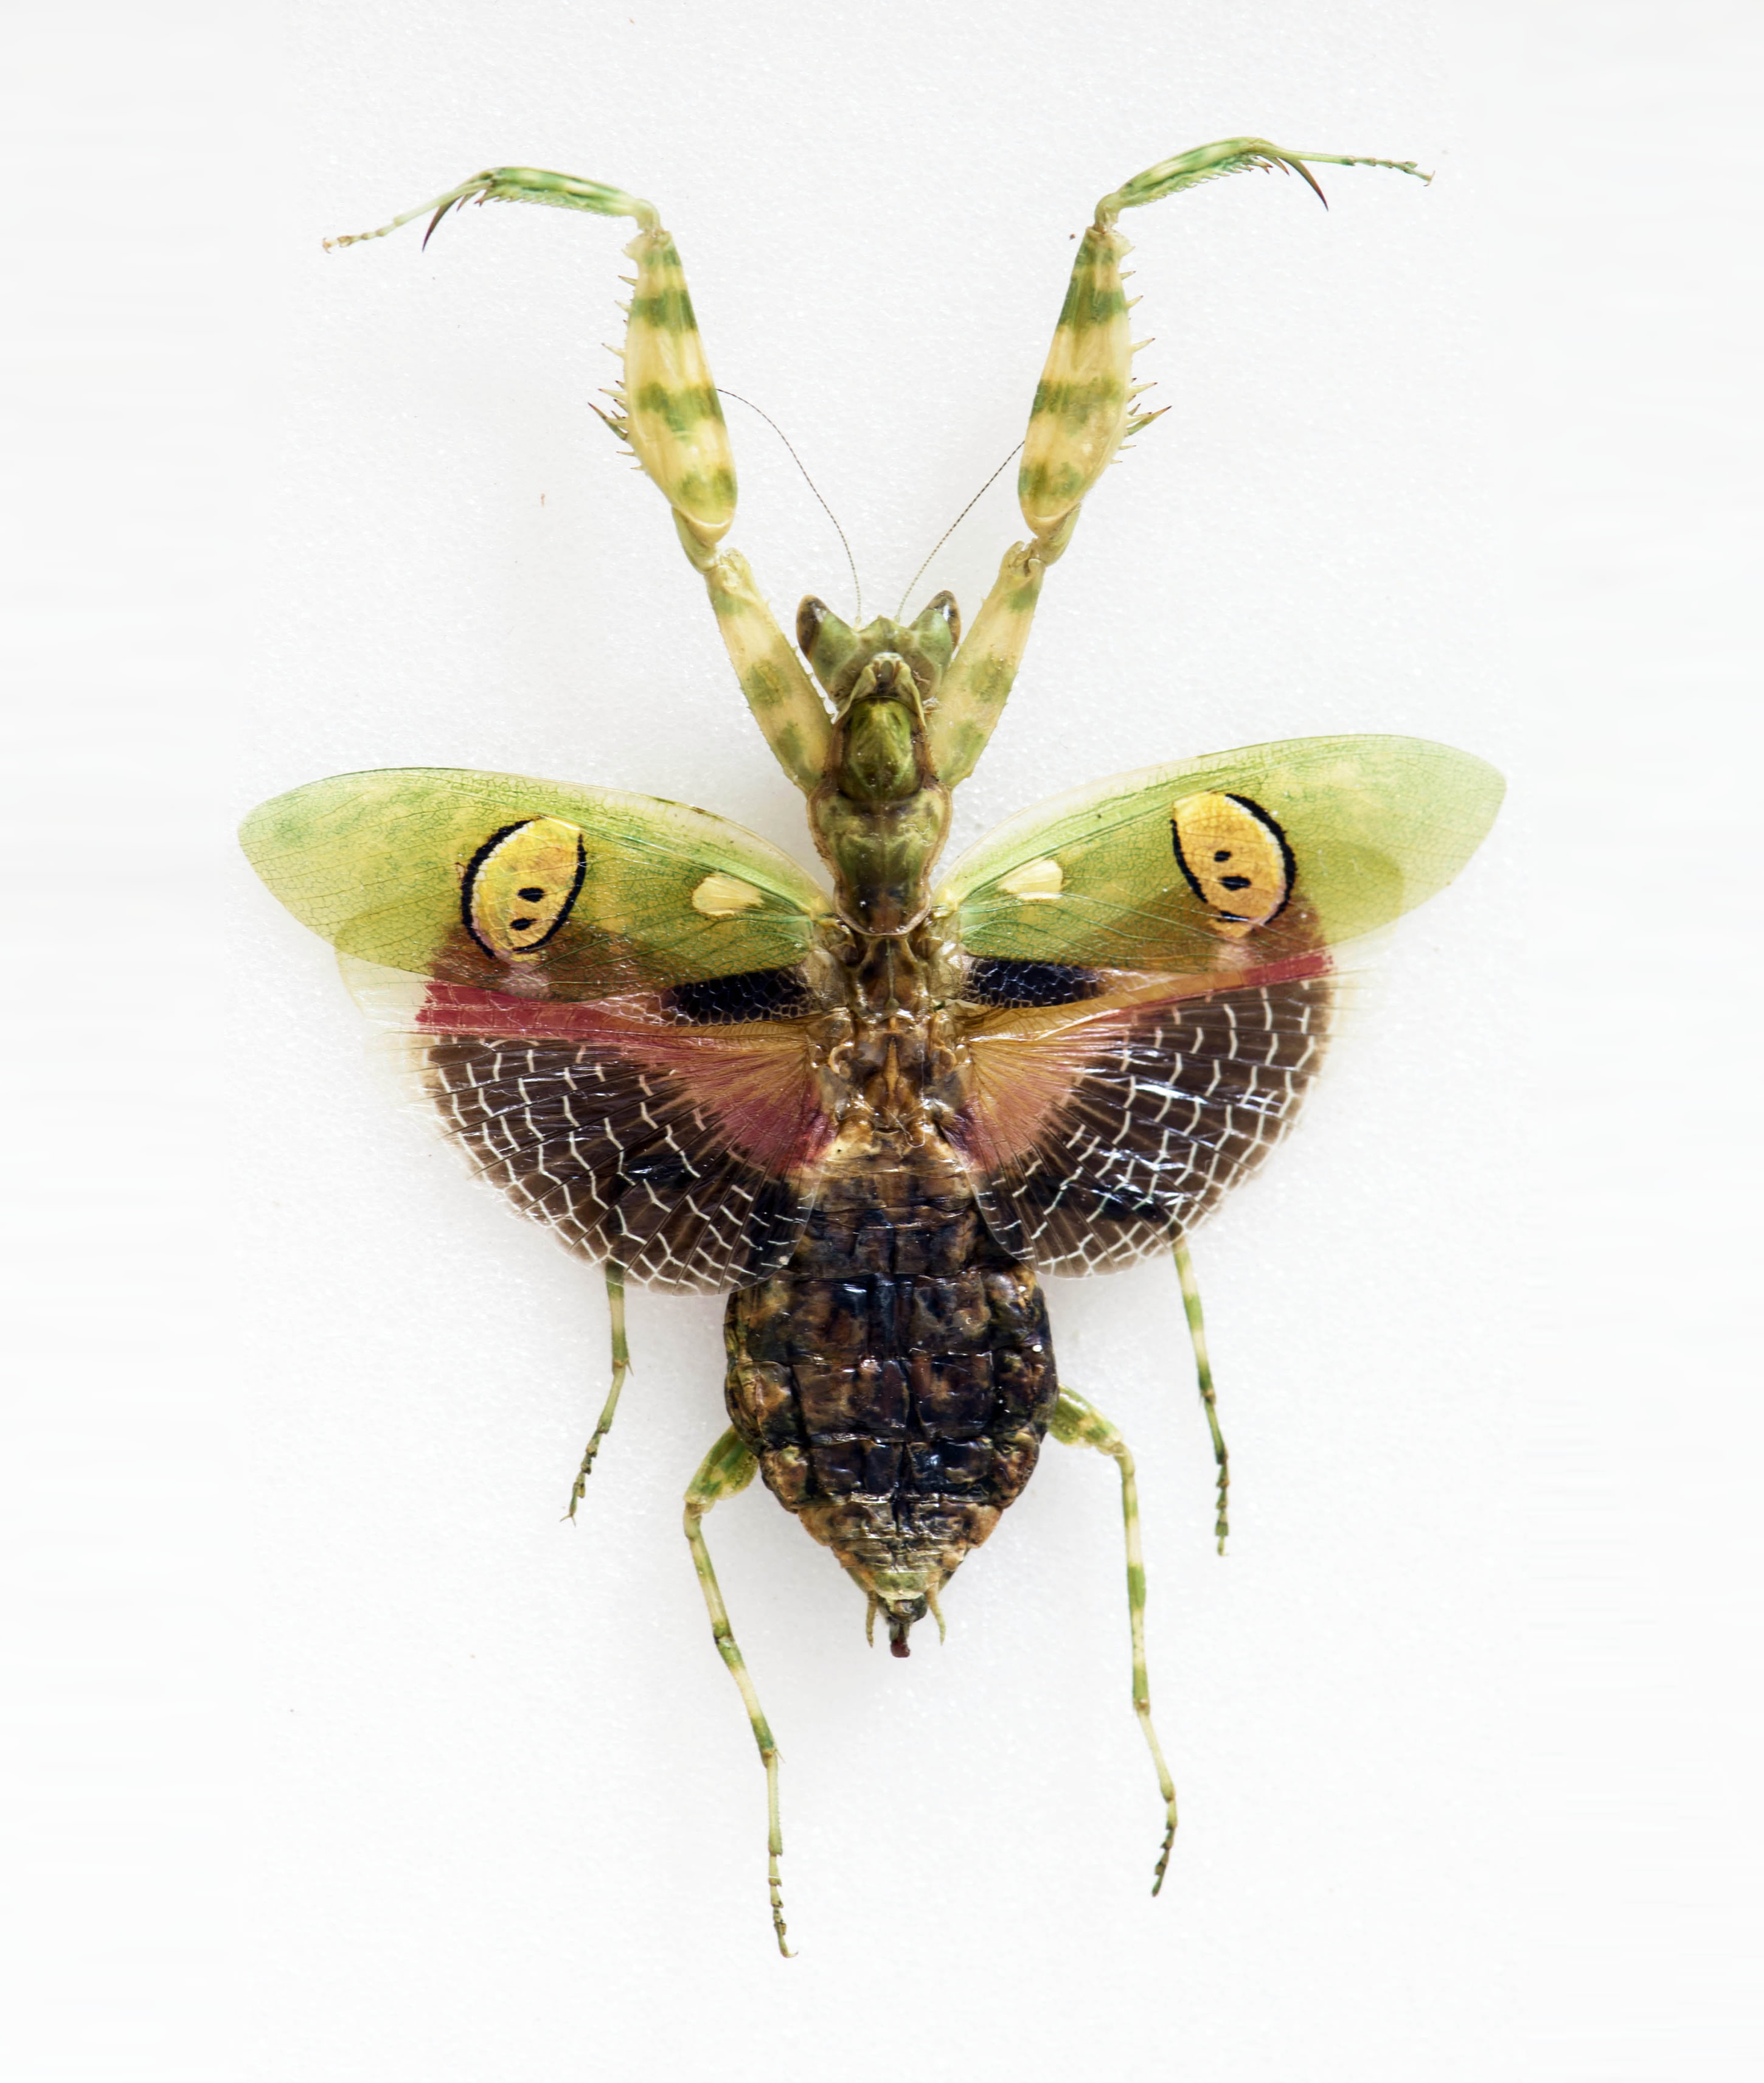 Cvjetna bogomoljka (Creobroter gemmata)